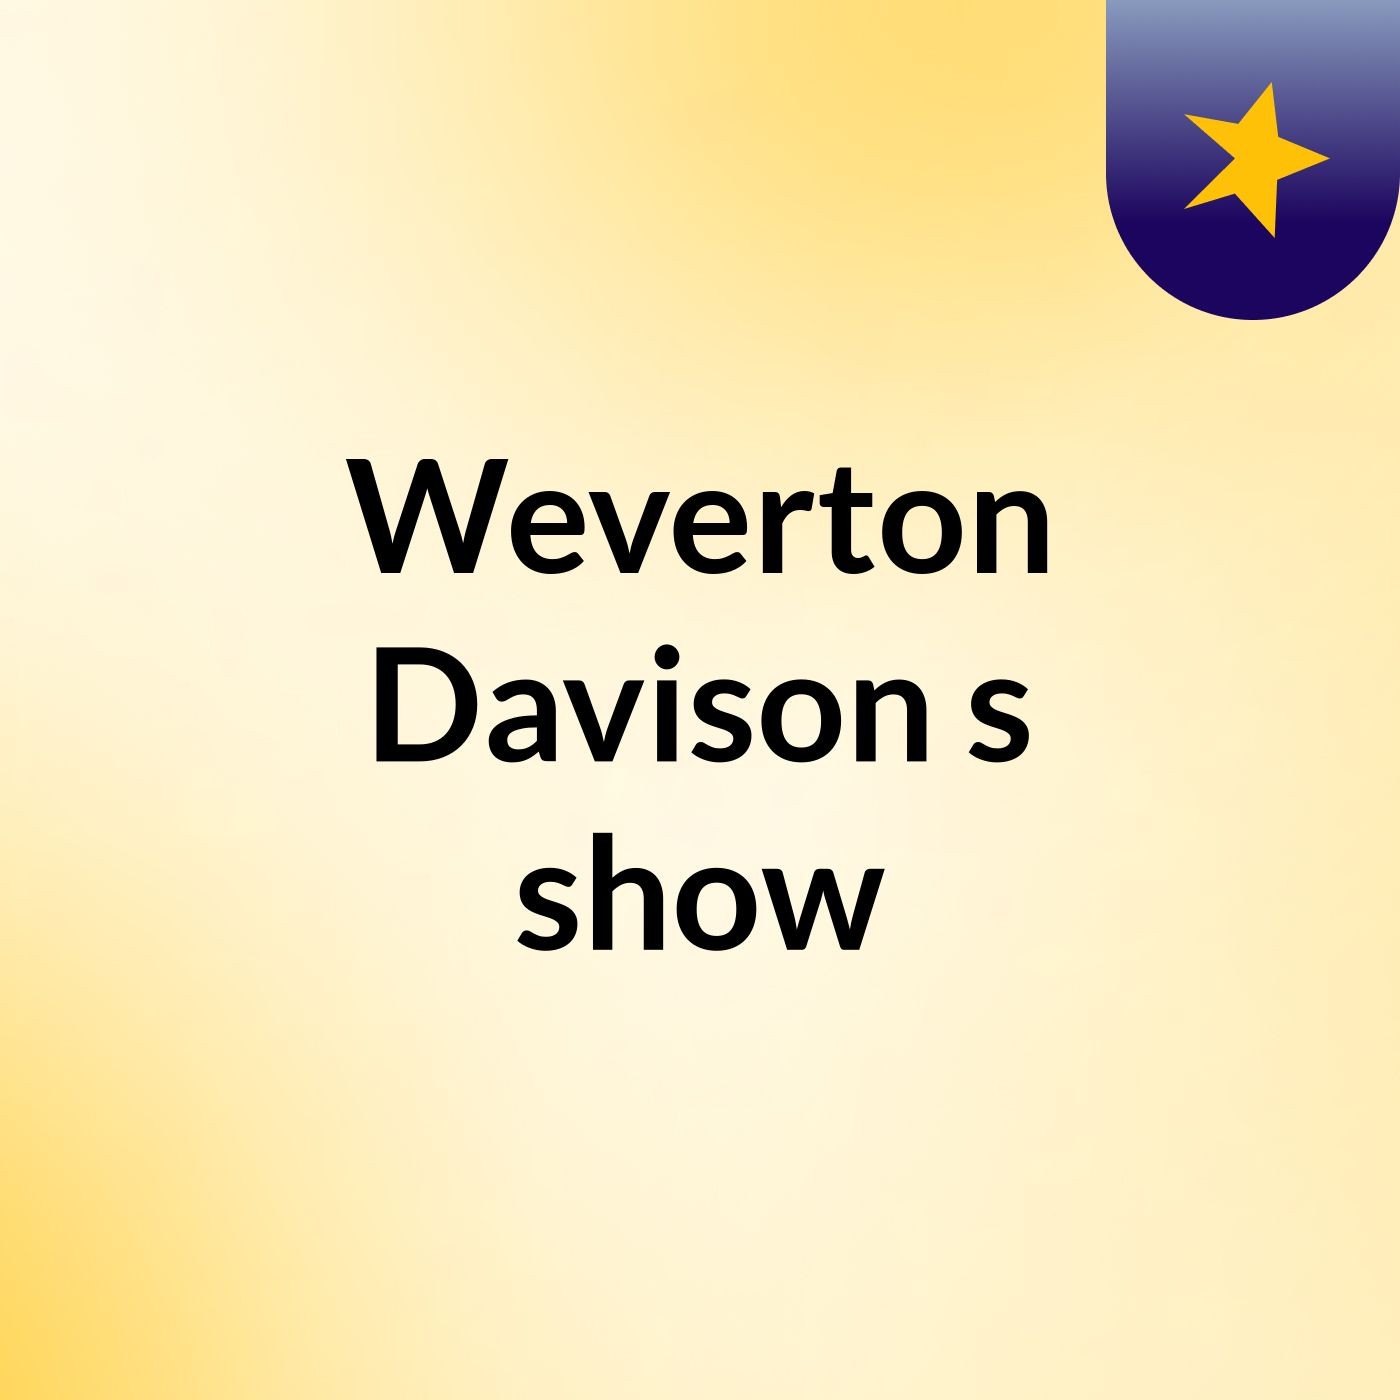 Weverton Davison's show